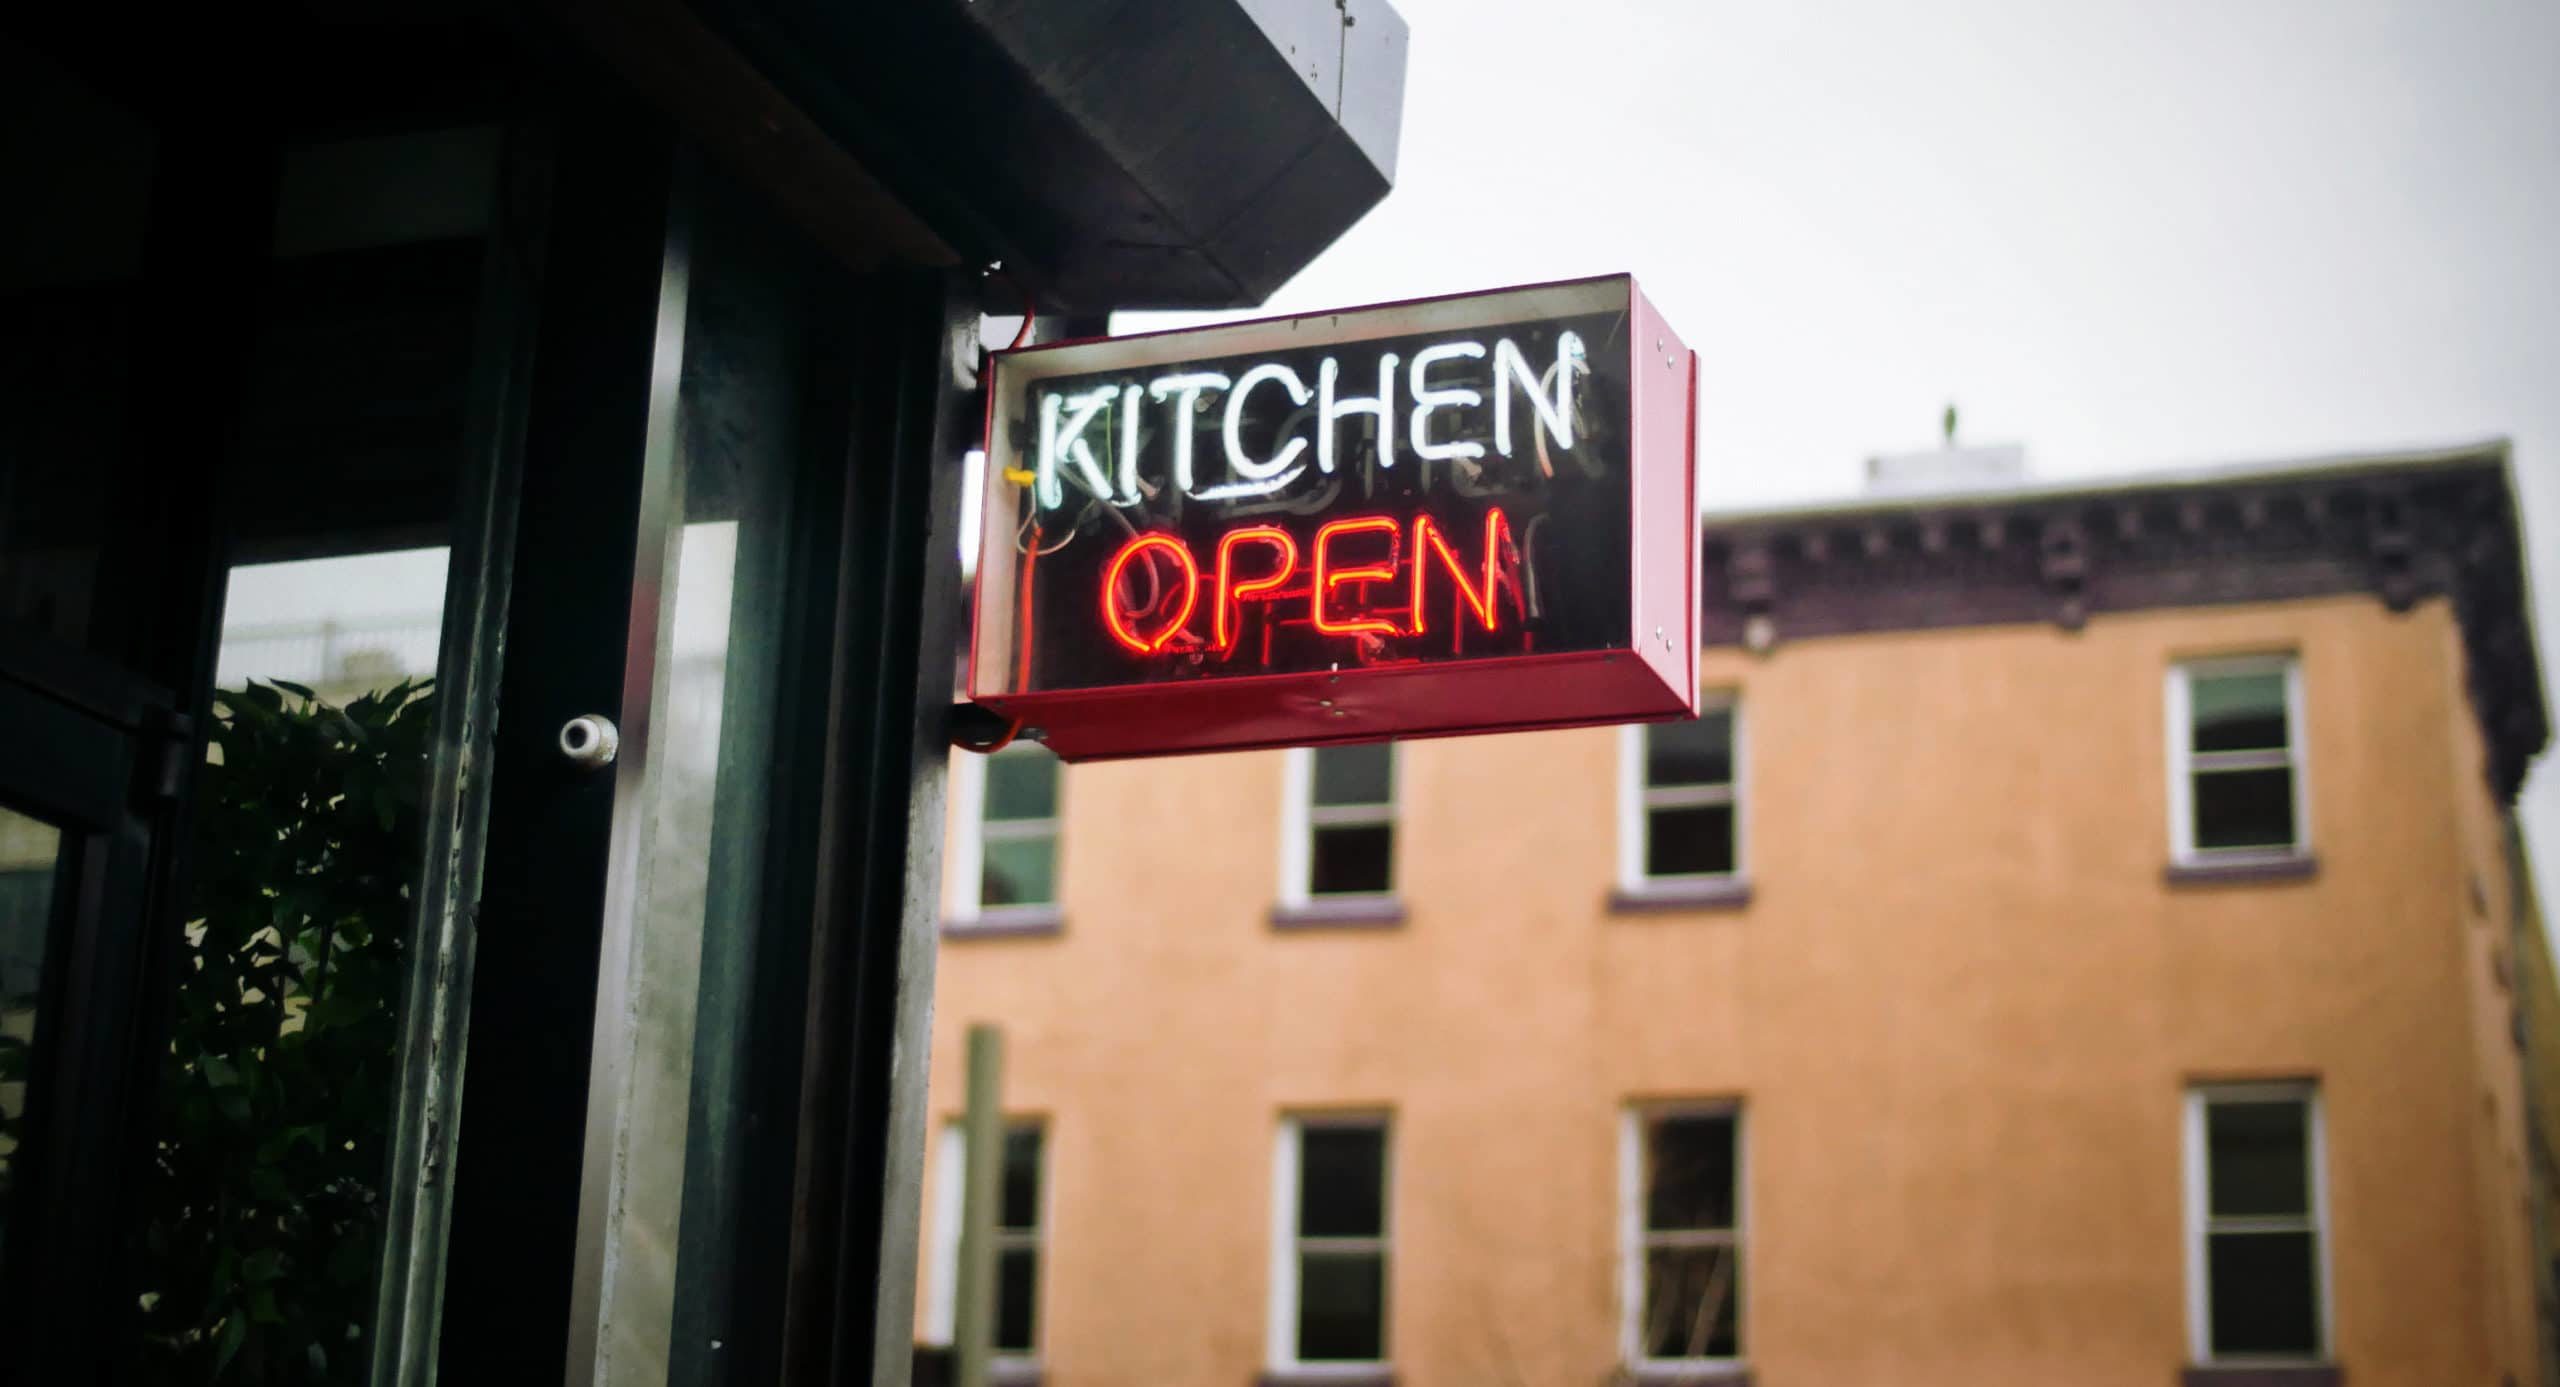 "Kitchen Open" sign on restaurant